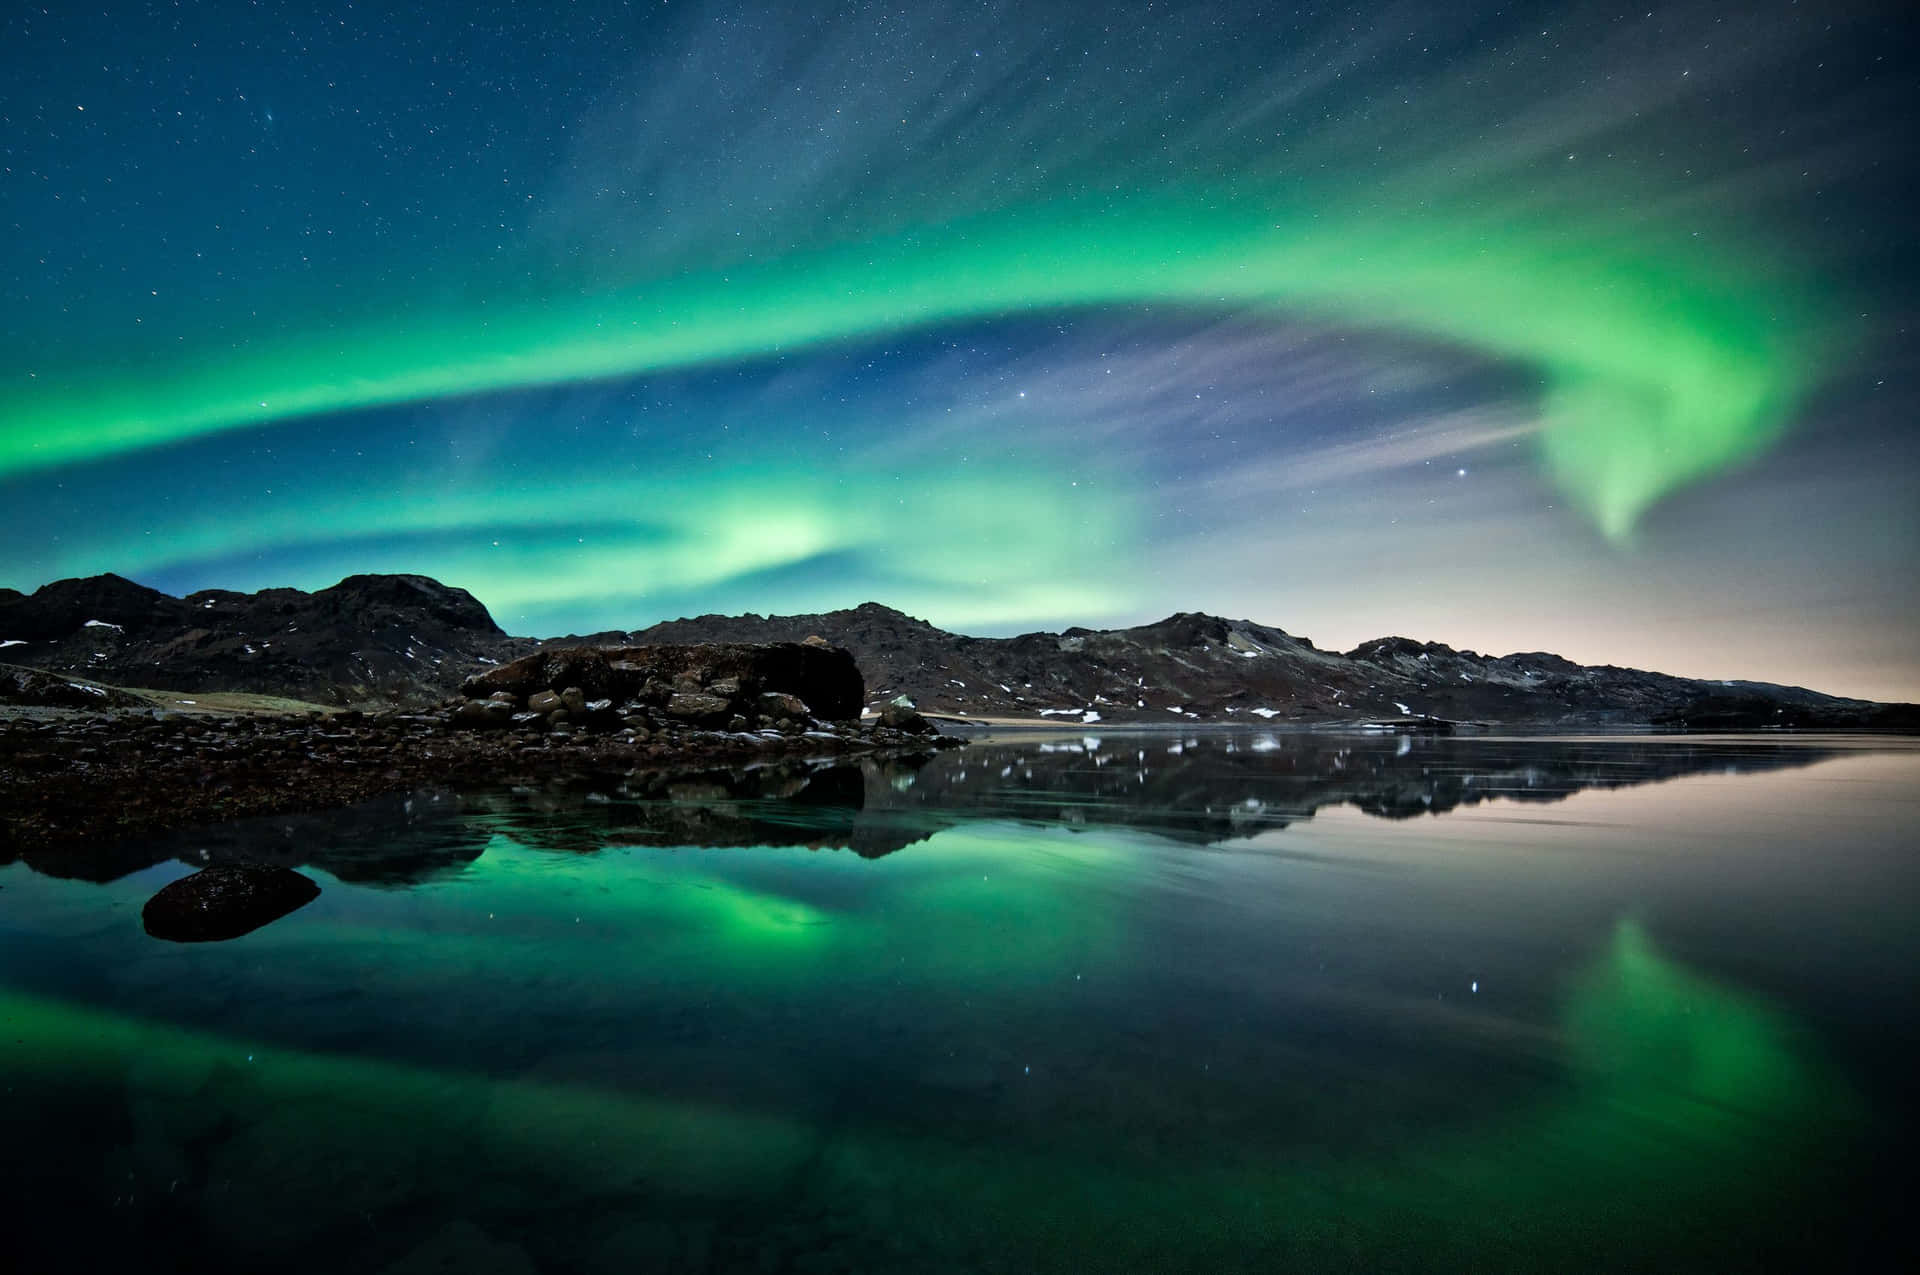 An awe-inspiring Aurora Borealis lighting up the night sky